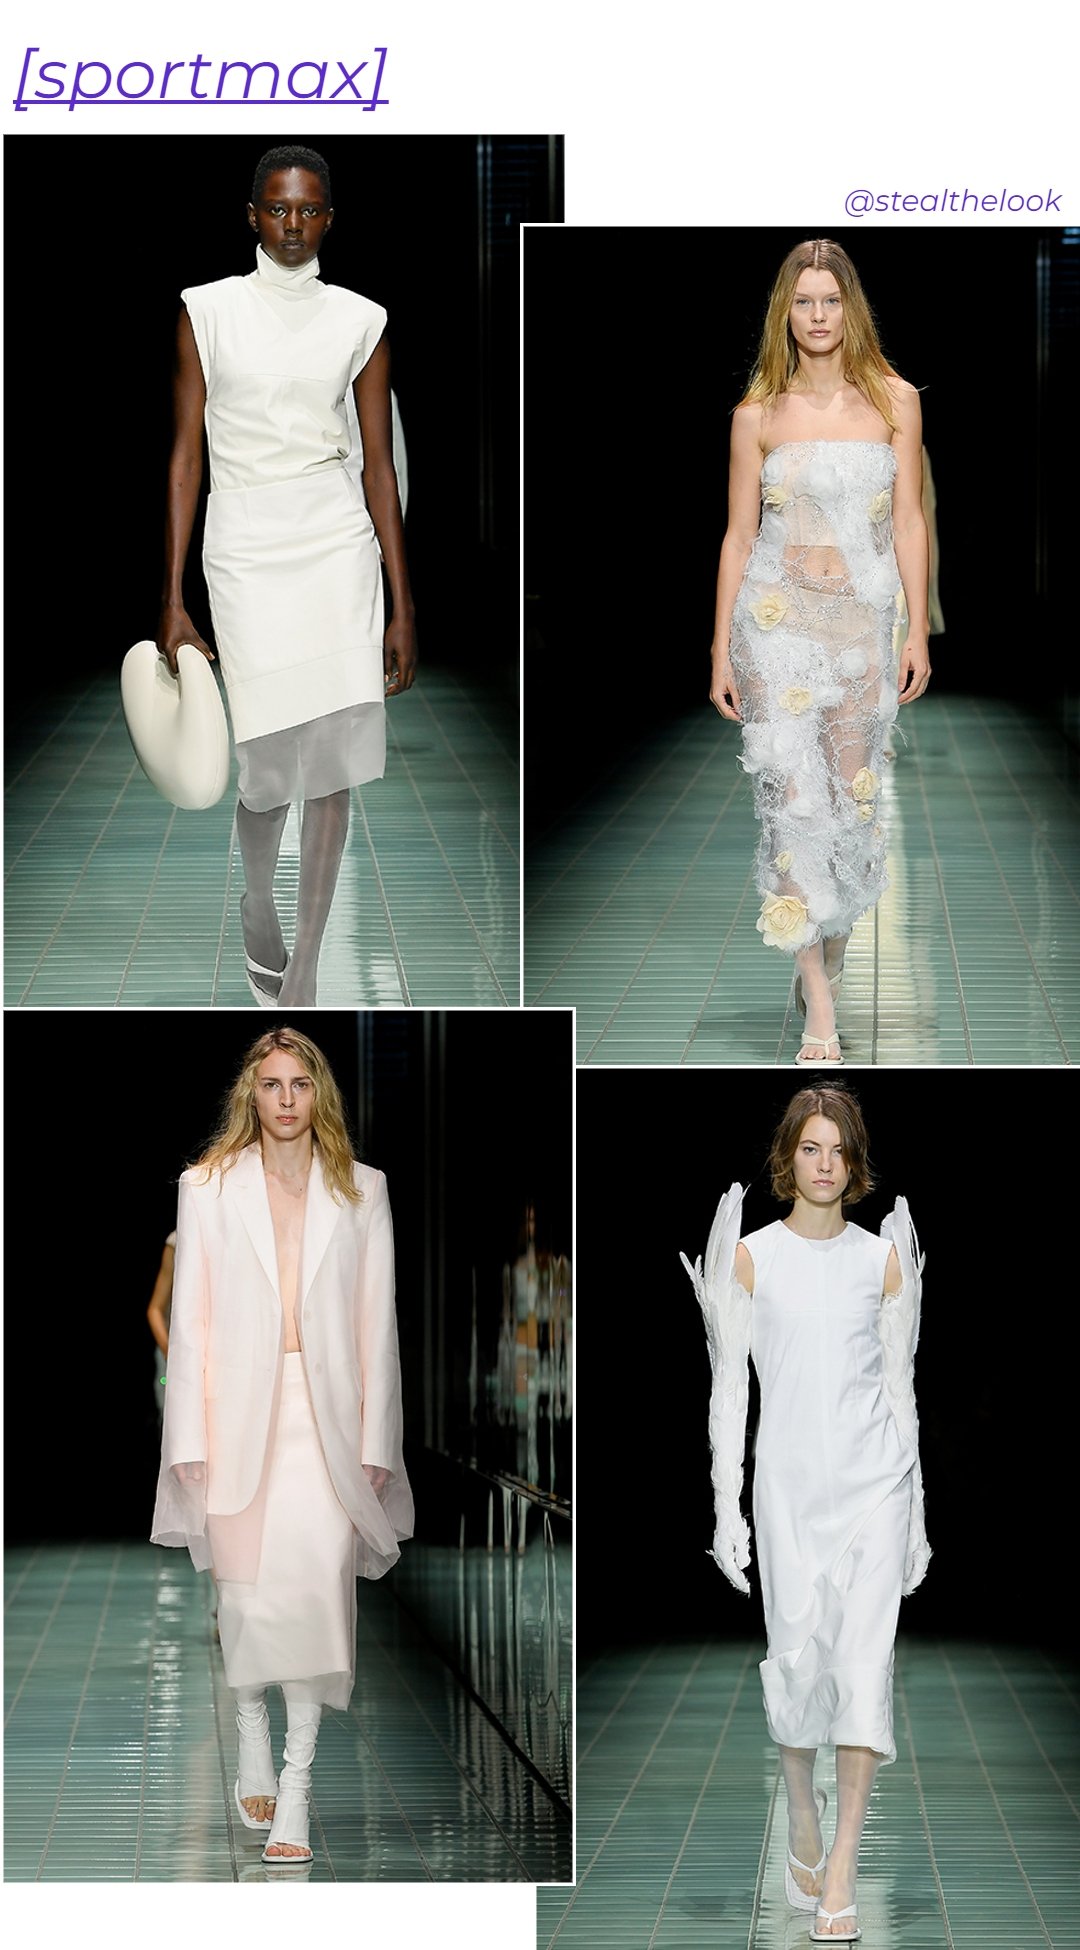 Sportmax - roupas diversas - Milano Fashion Week - primavera - colagem de imagens - https://stealthelook.com.br